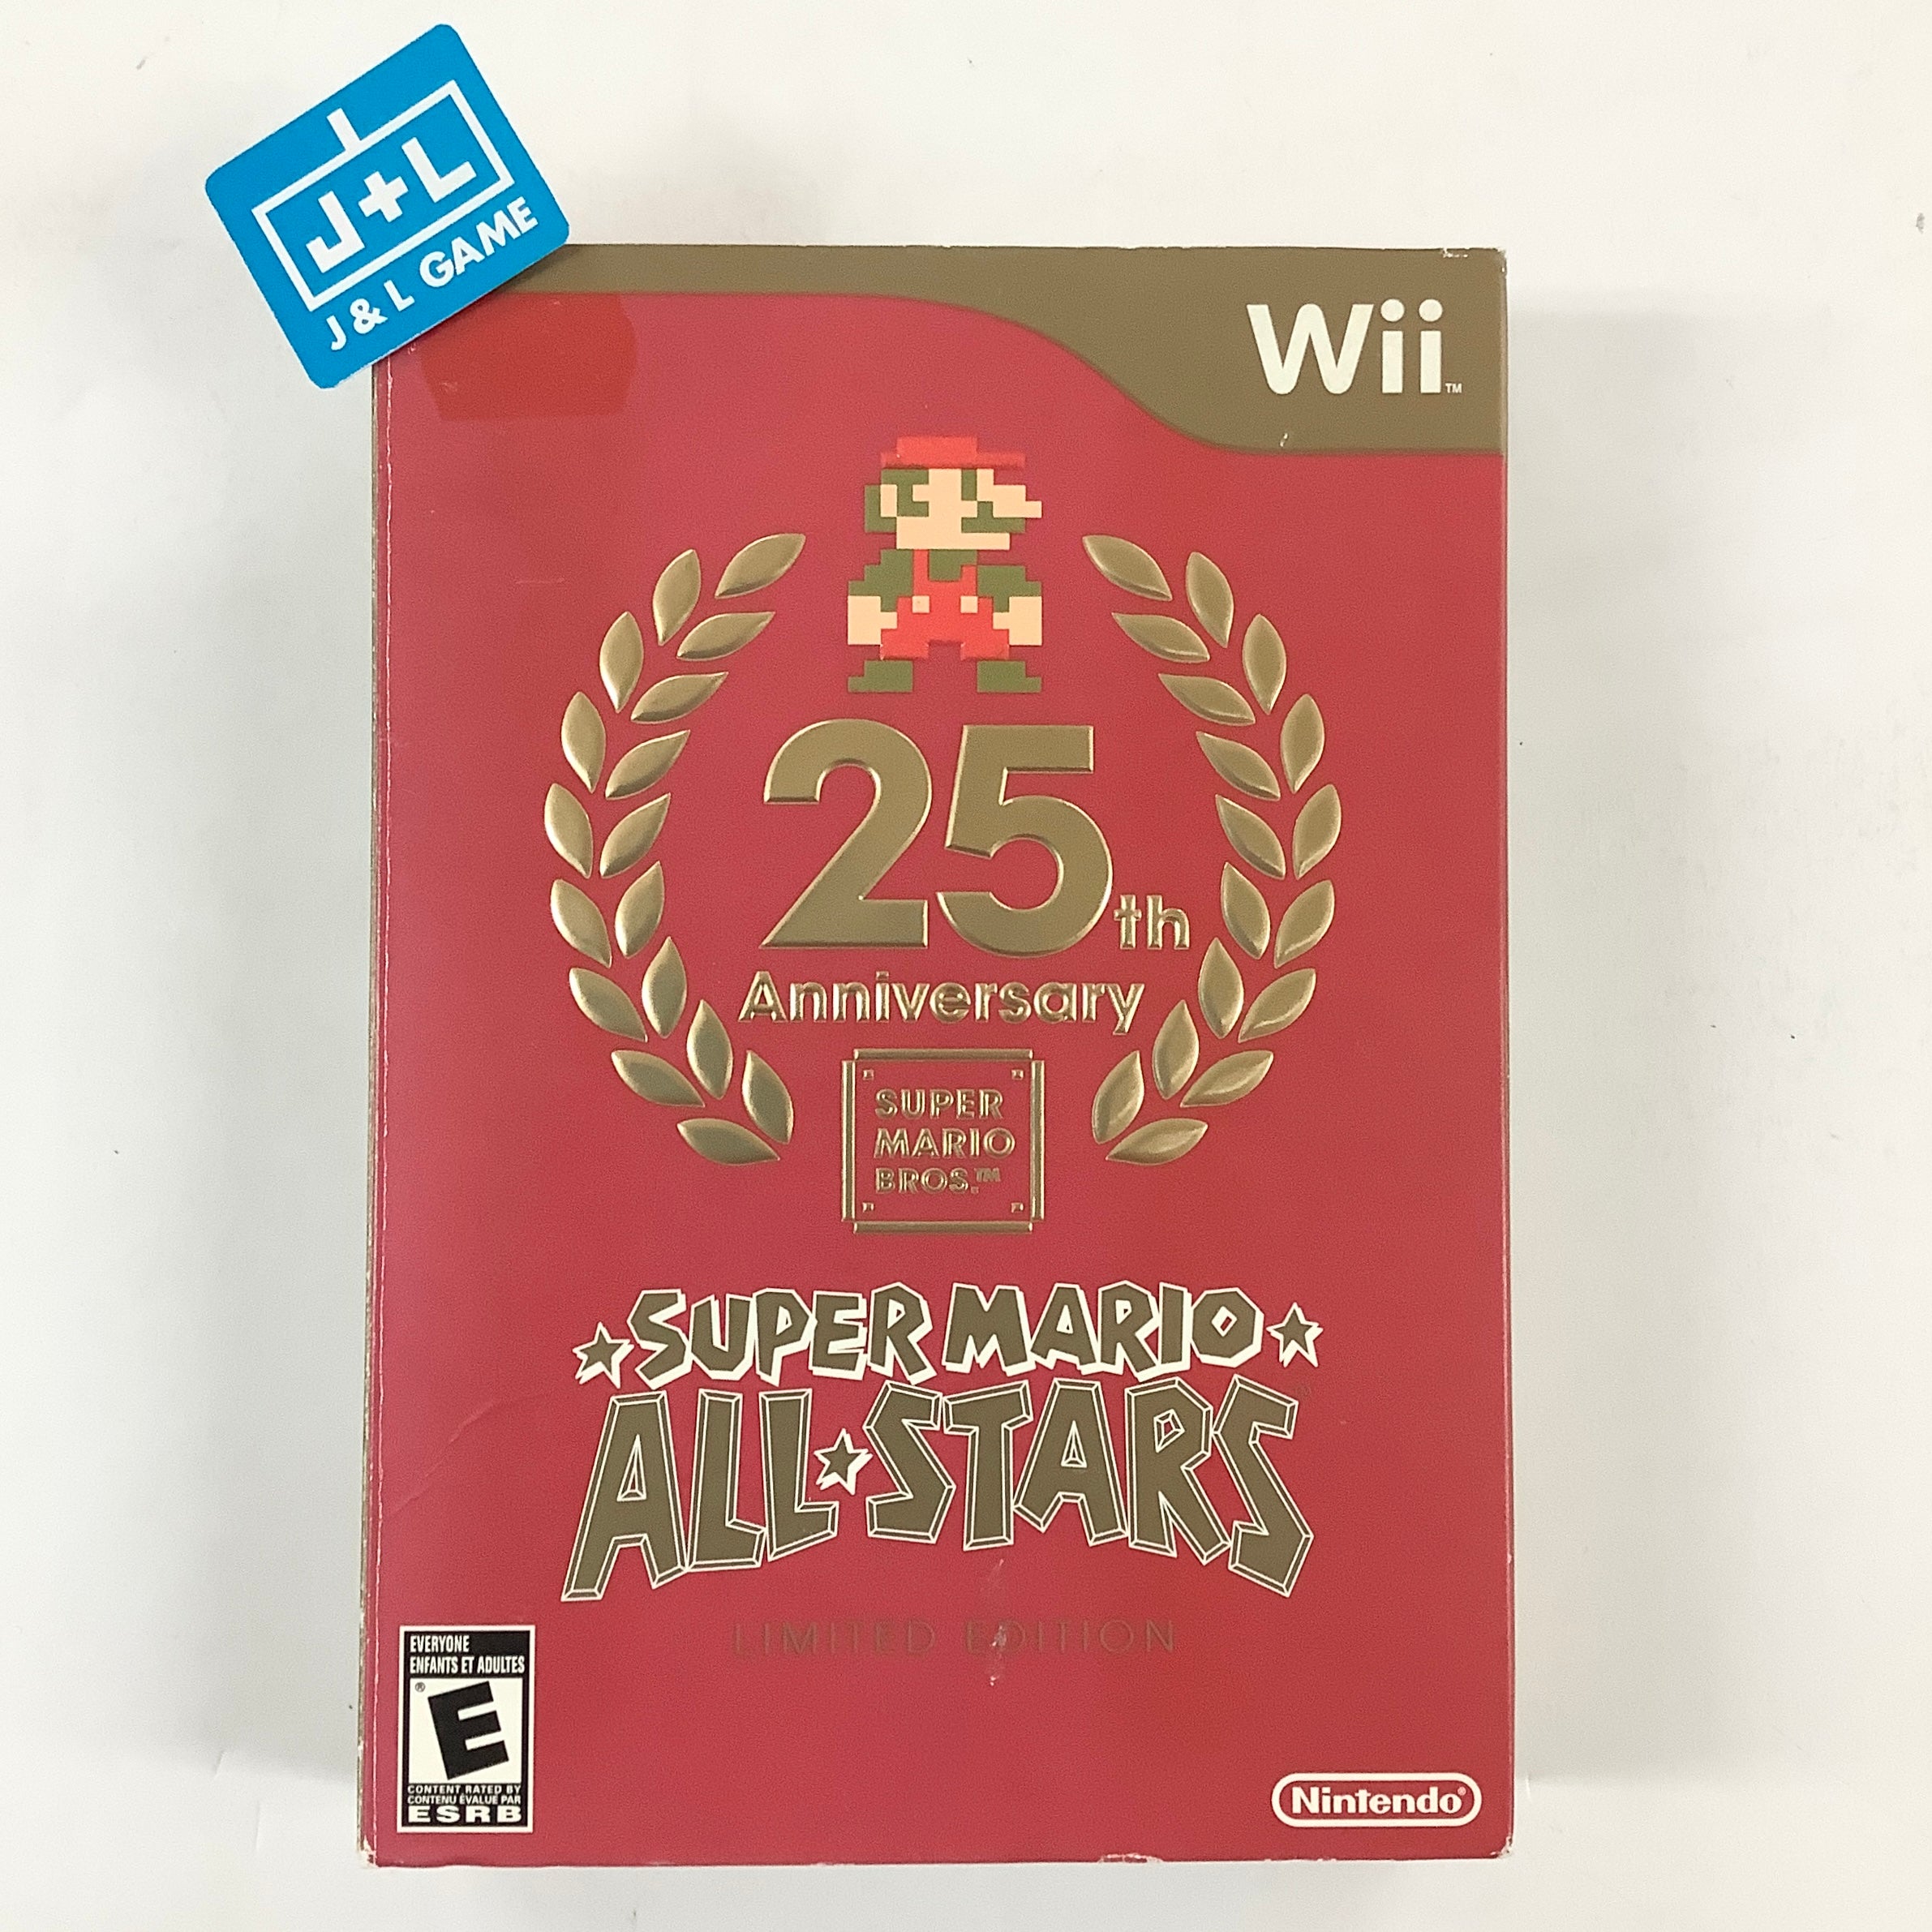 Super Mario All-Stars (Limited Edition) - Nintendo Wii Video Games Nintendo   